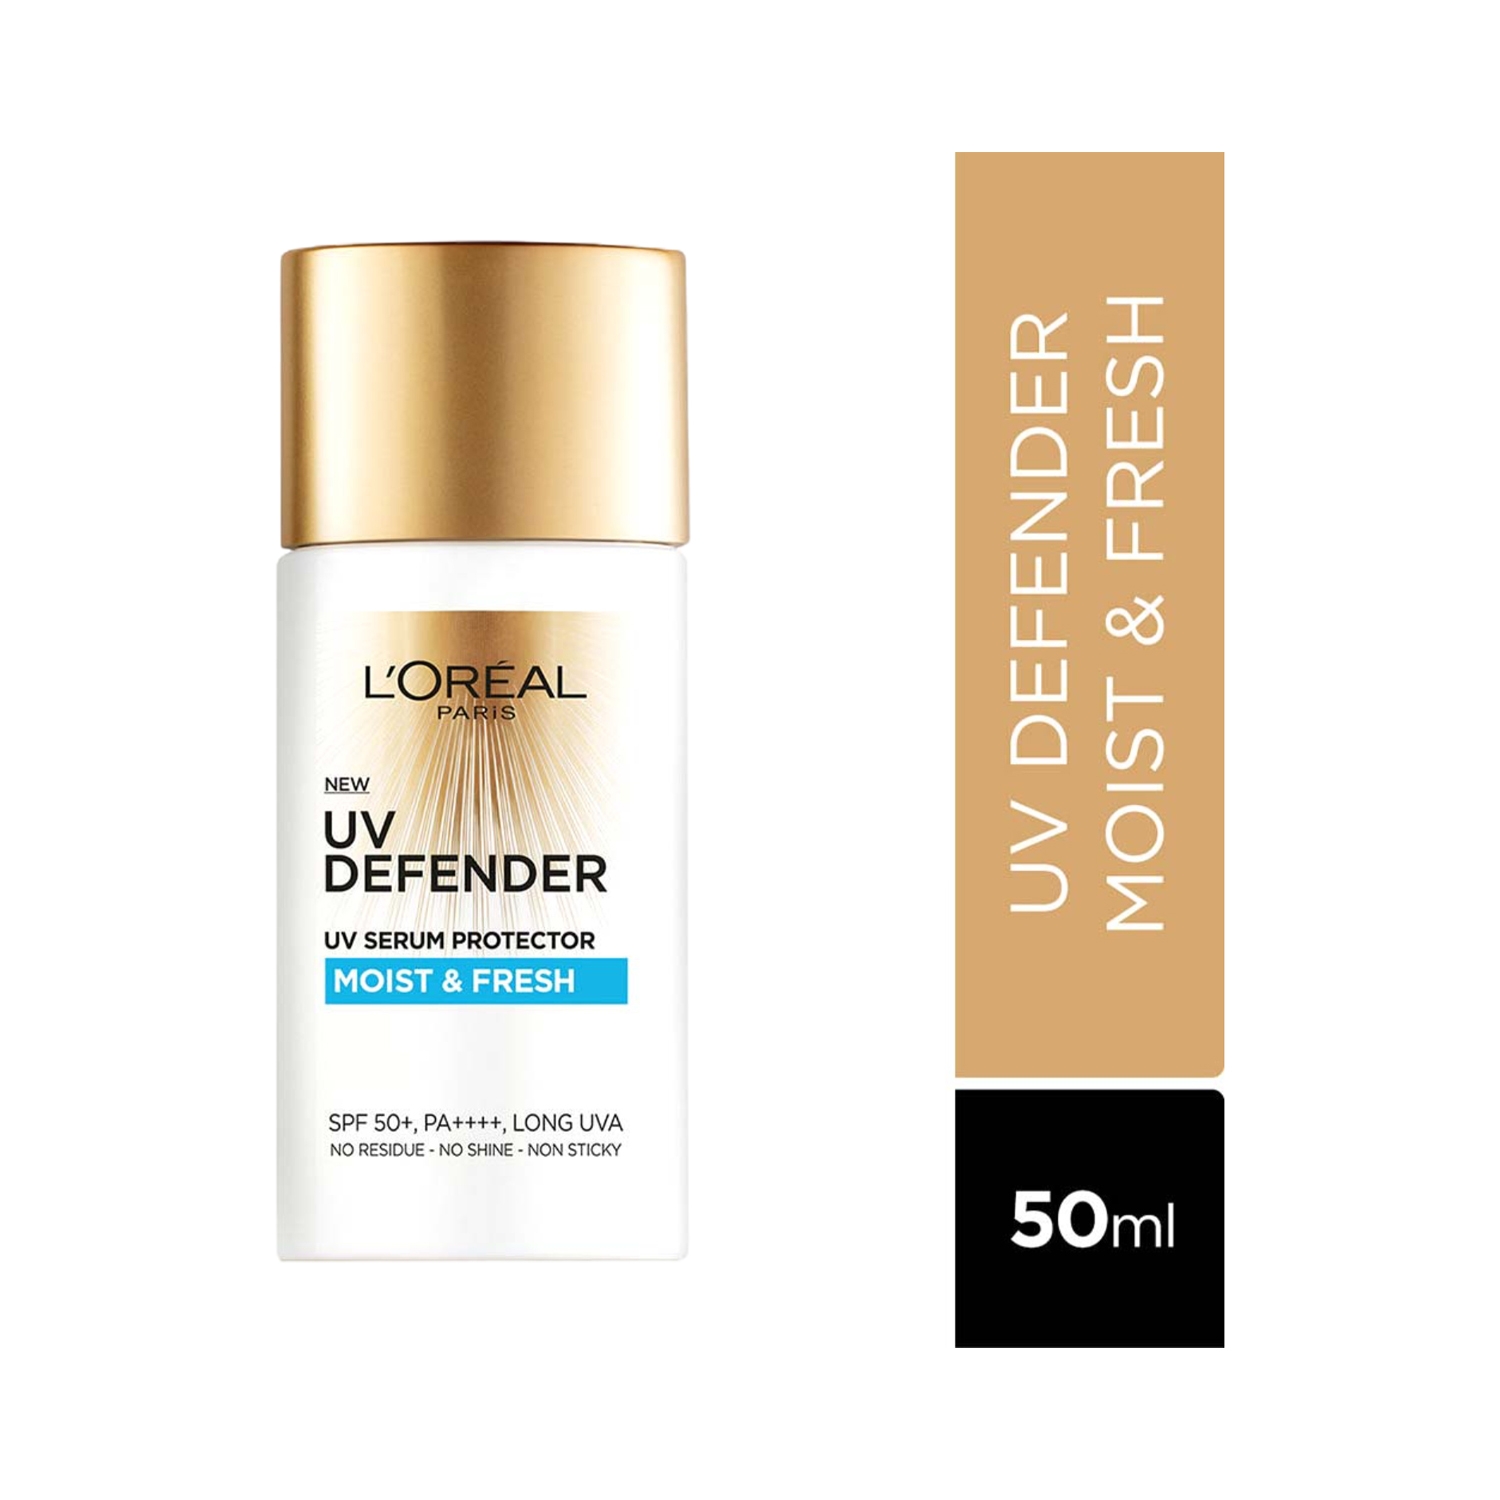 L'Oreal Paris | L'Oreal Paris UV Defender Serum Protector Sunscreen SPF 50 PA+++ - Moist & Fresh (50ml)